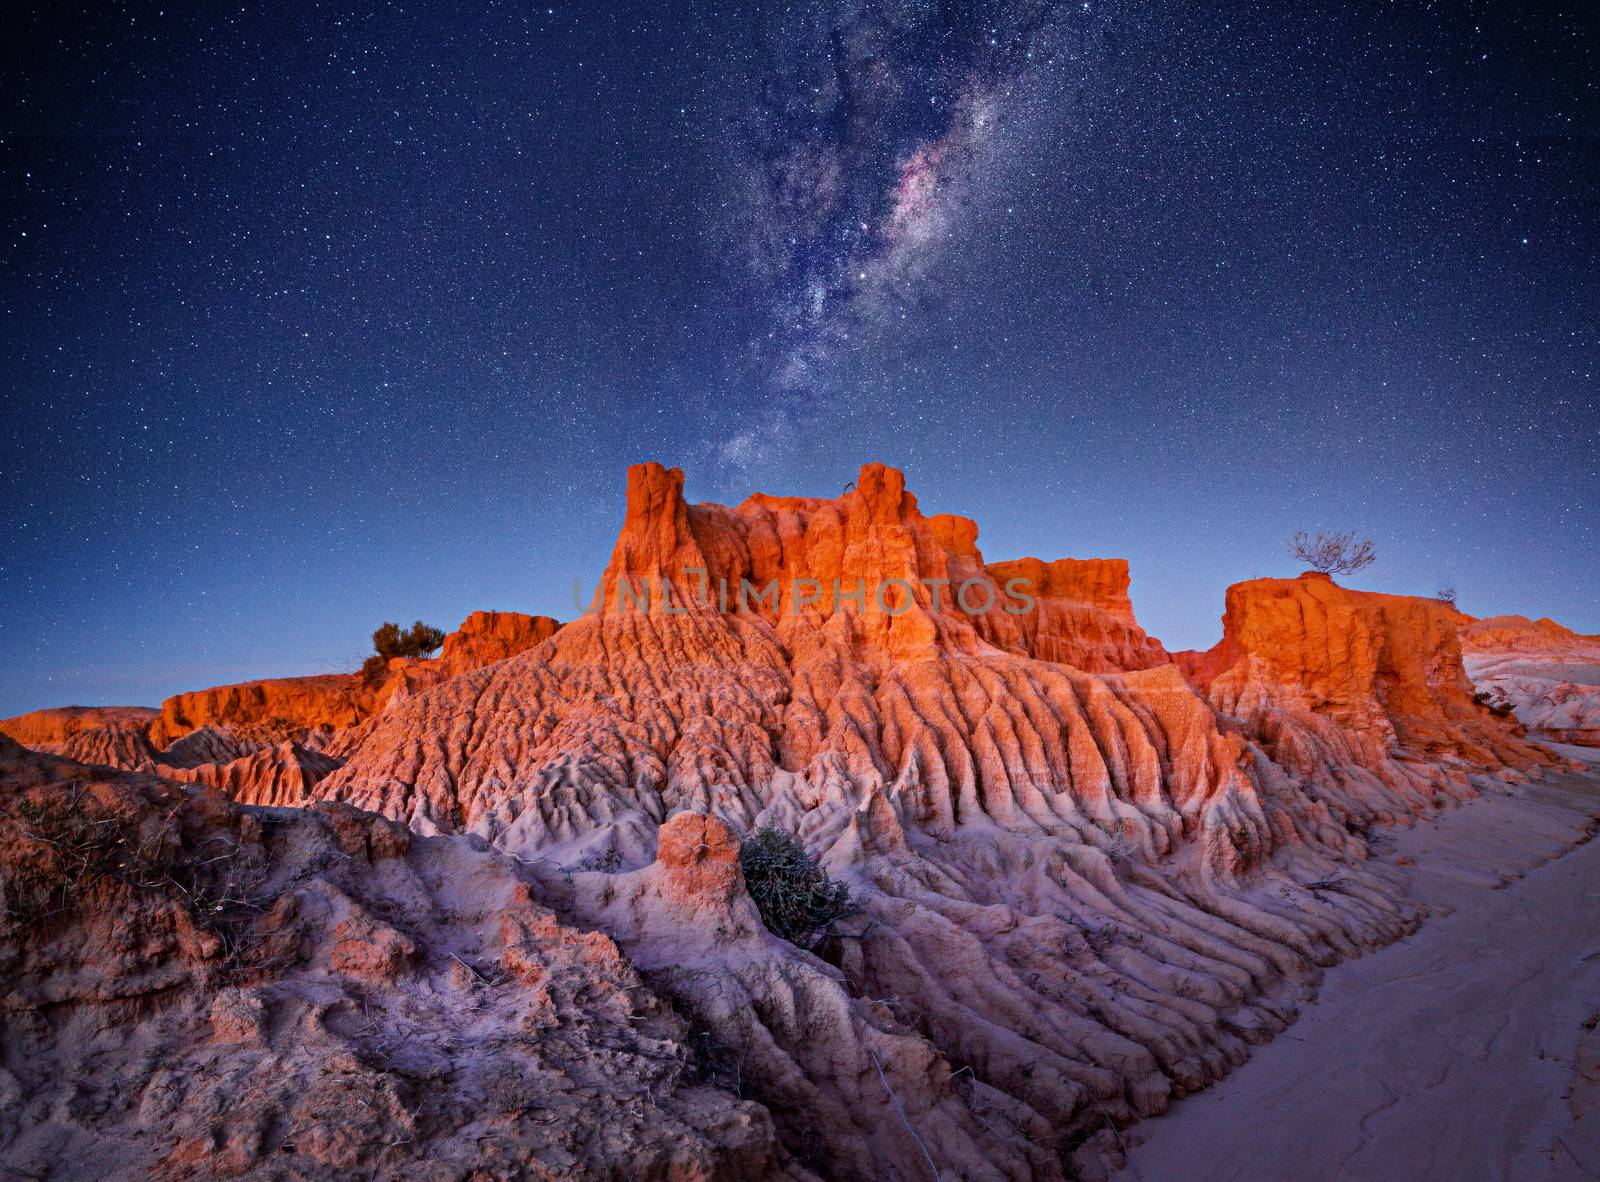 Starry skies over desert landscape by lovleah